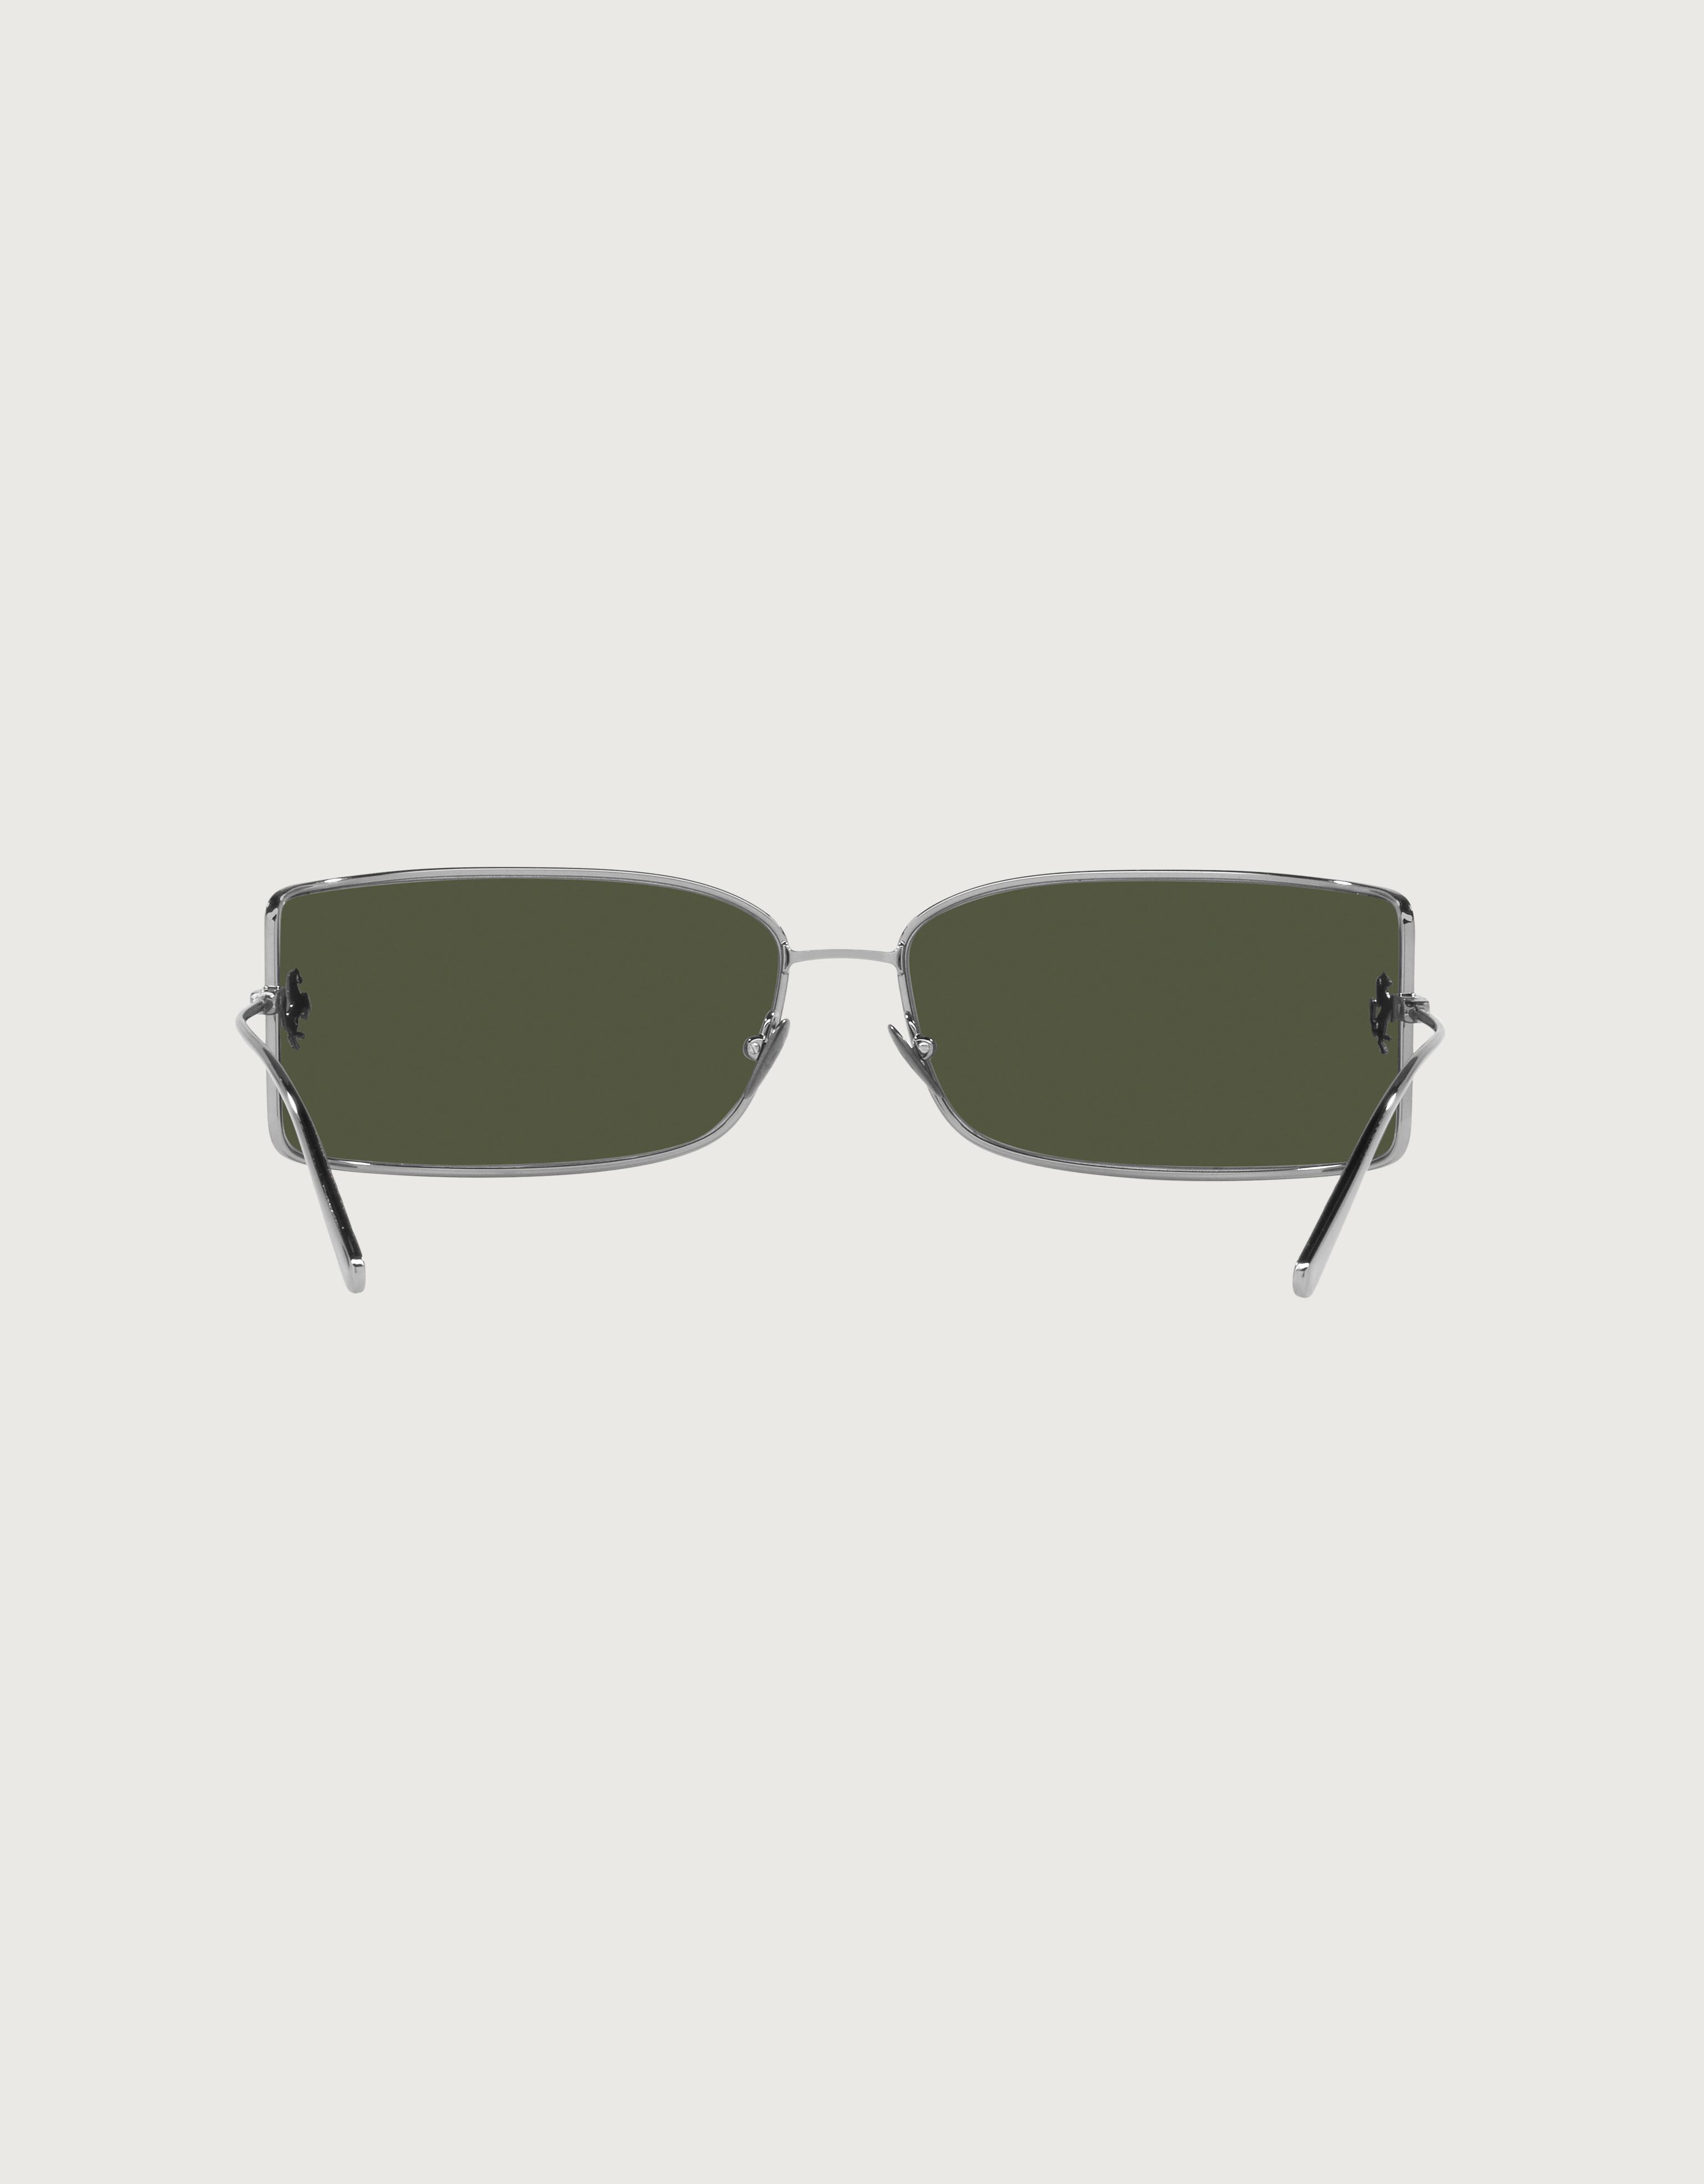 Ferrari Ferrari shield sunglasses with green lenses Dark Grey F0641f